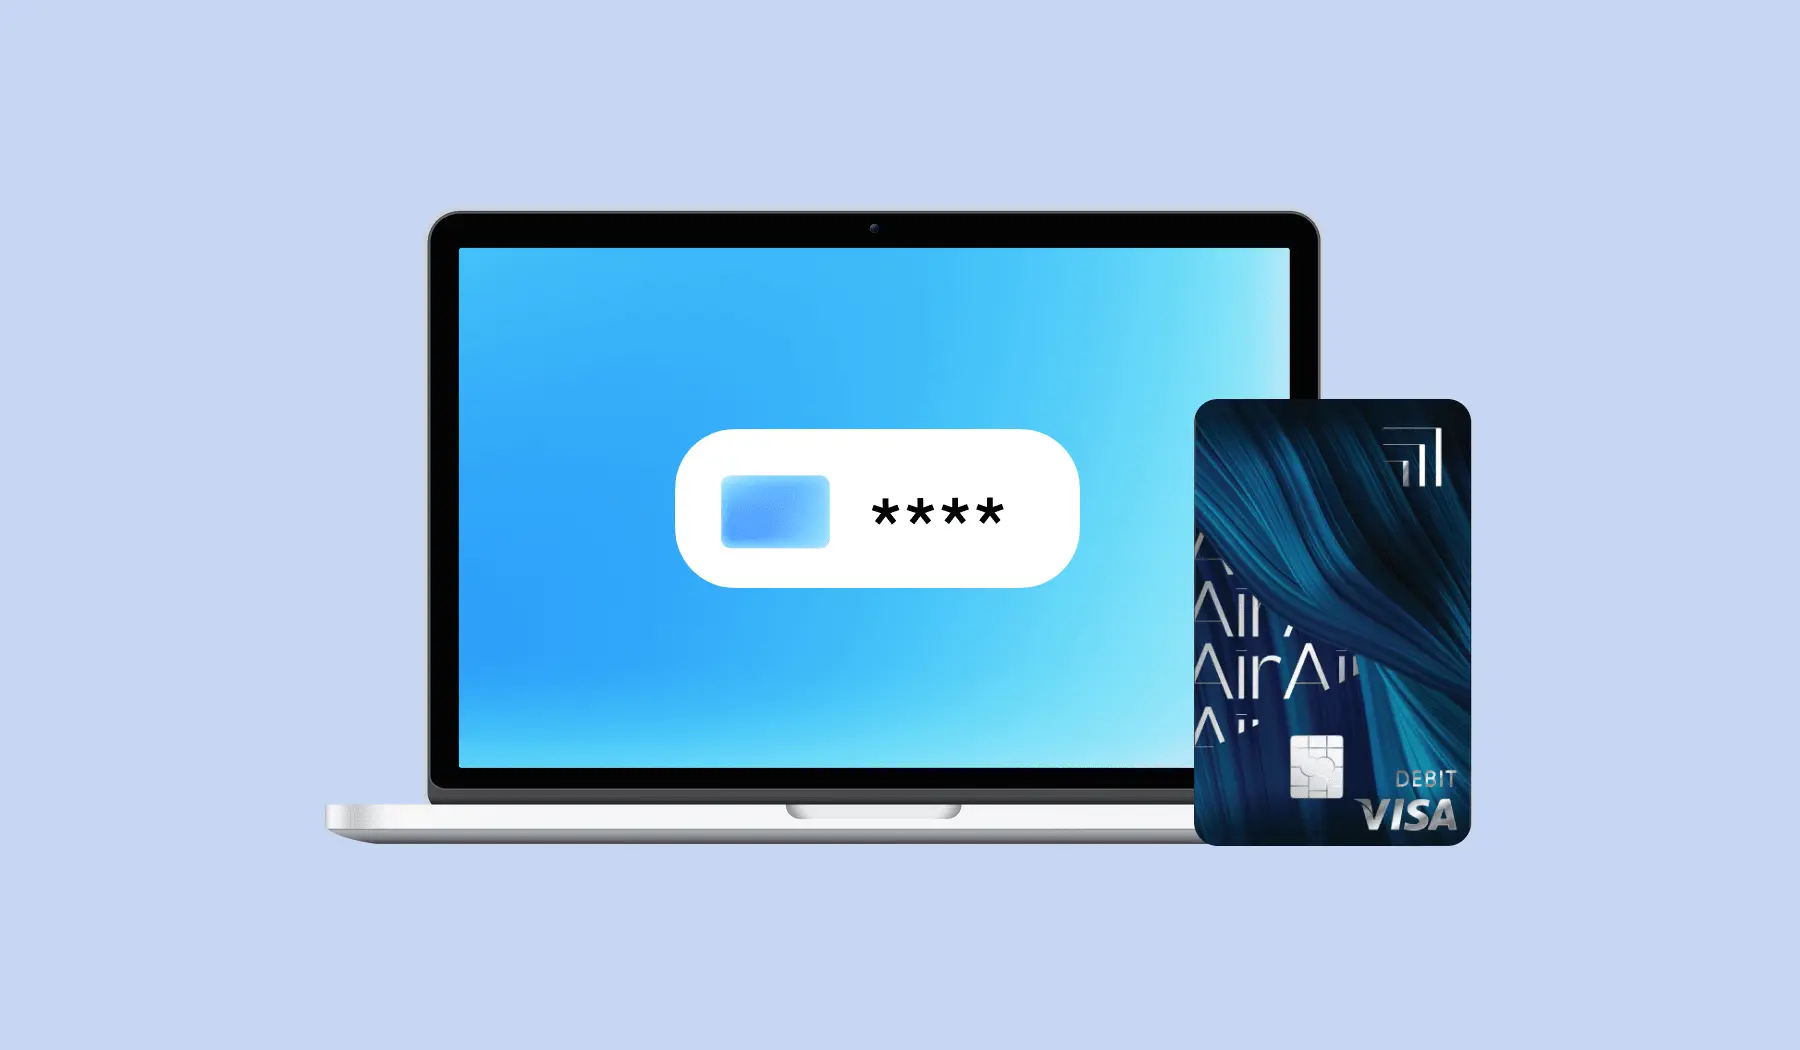 Air Visa debit card by Oxygen bank shown near laptop screen